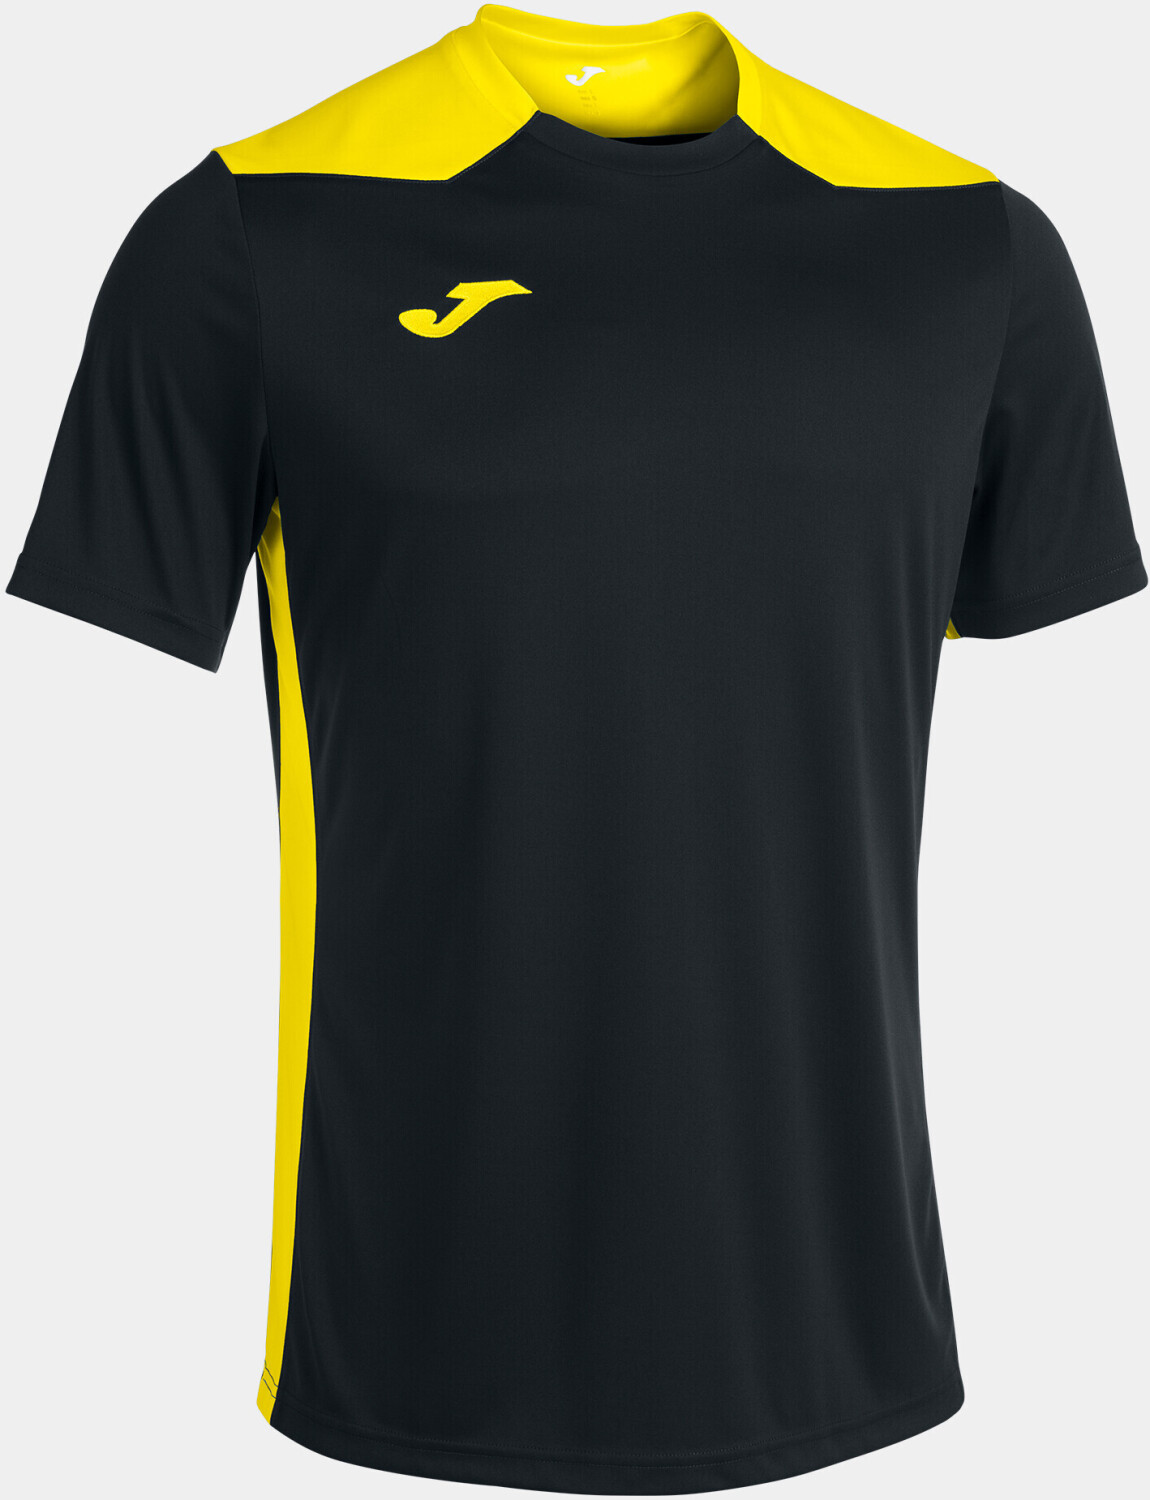 Photos - Football Kit Joma Championship VI Shirt Youth  black/yellow (101822k)